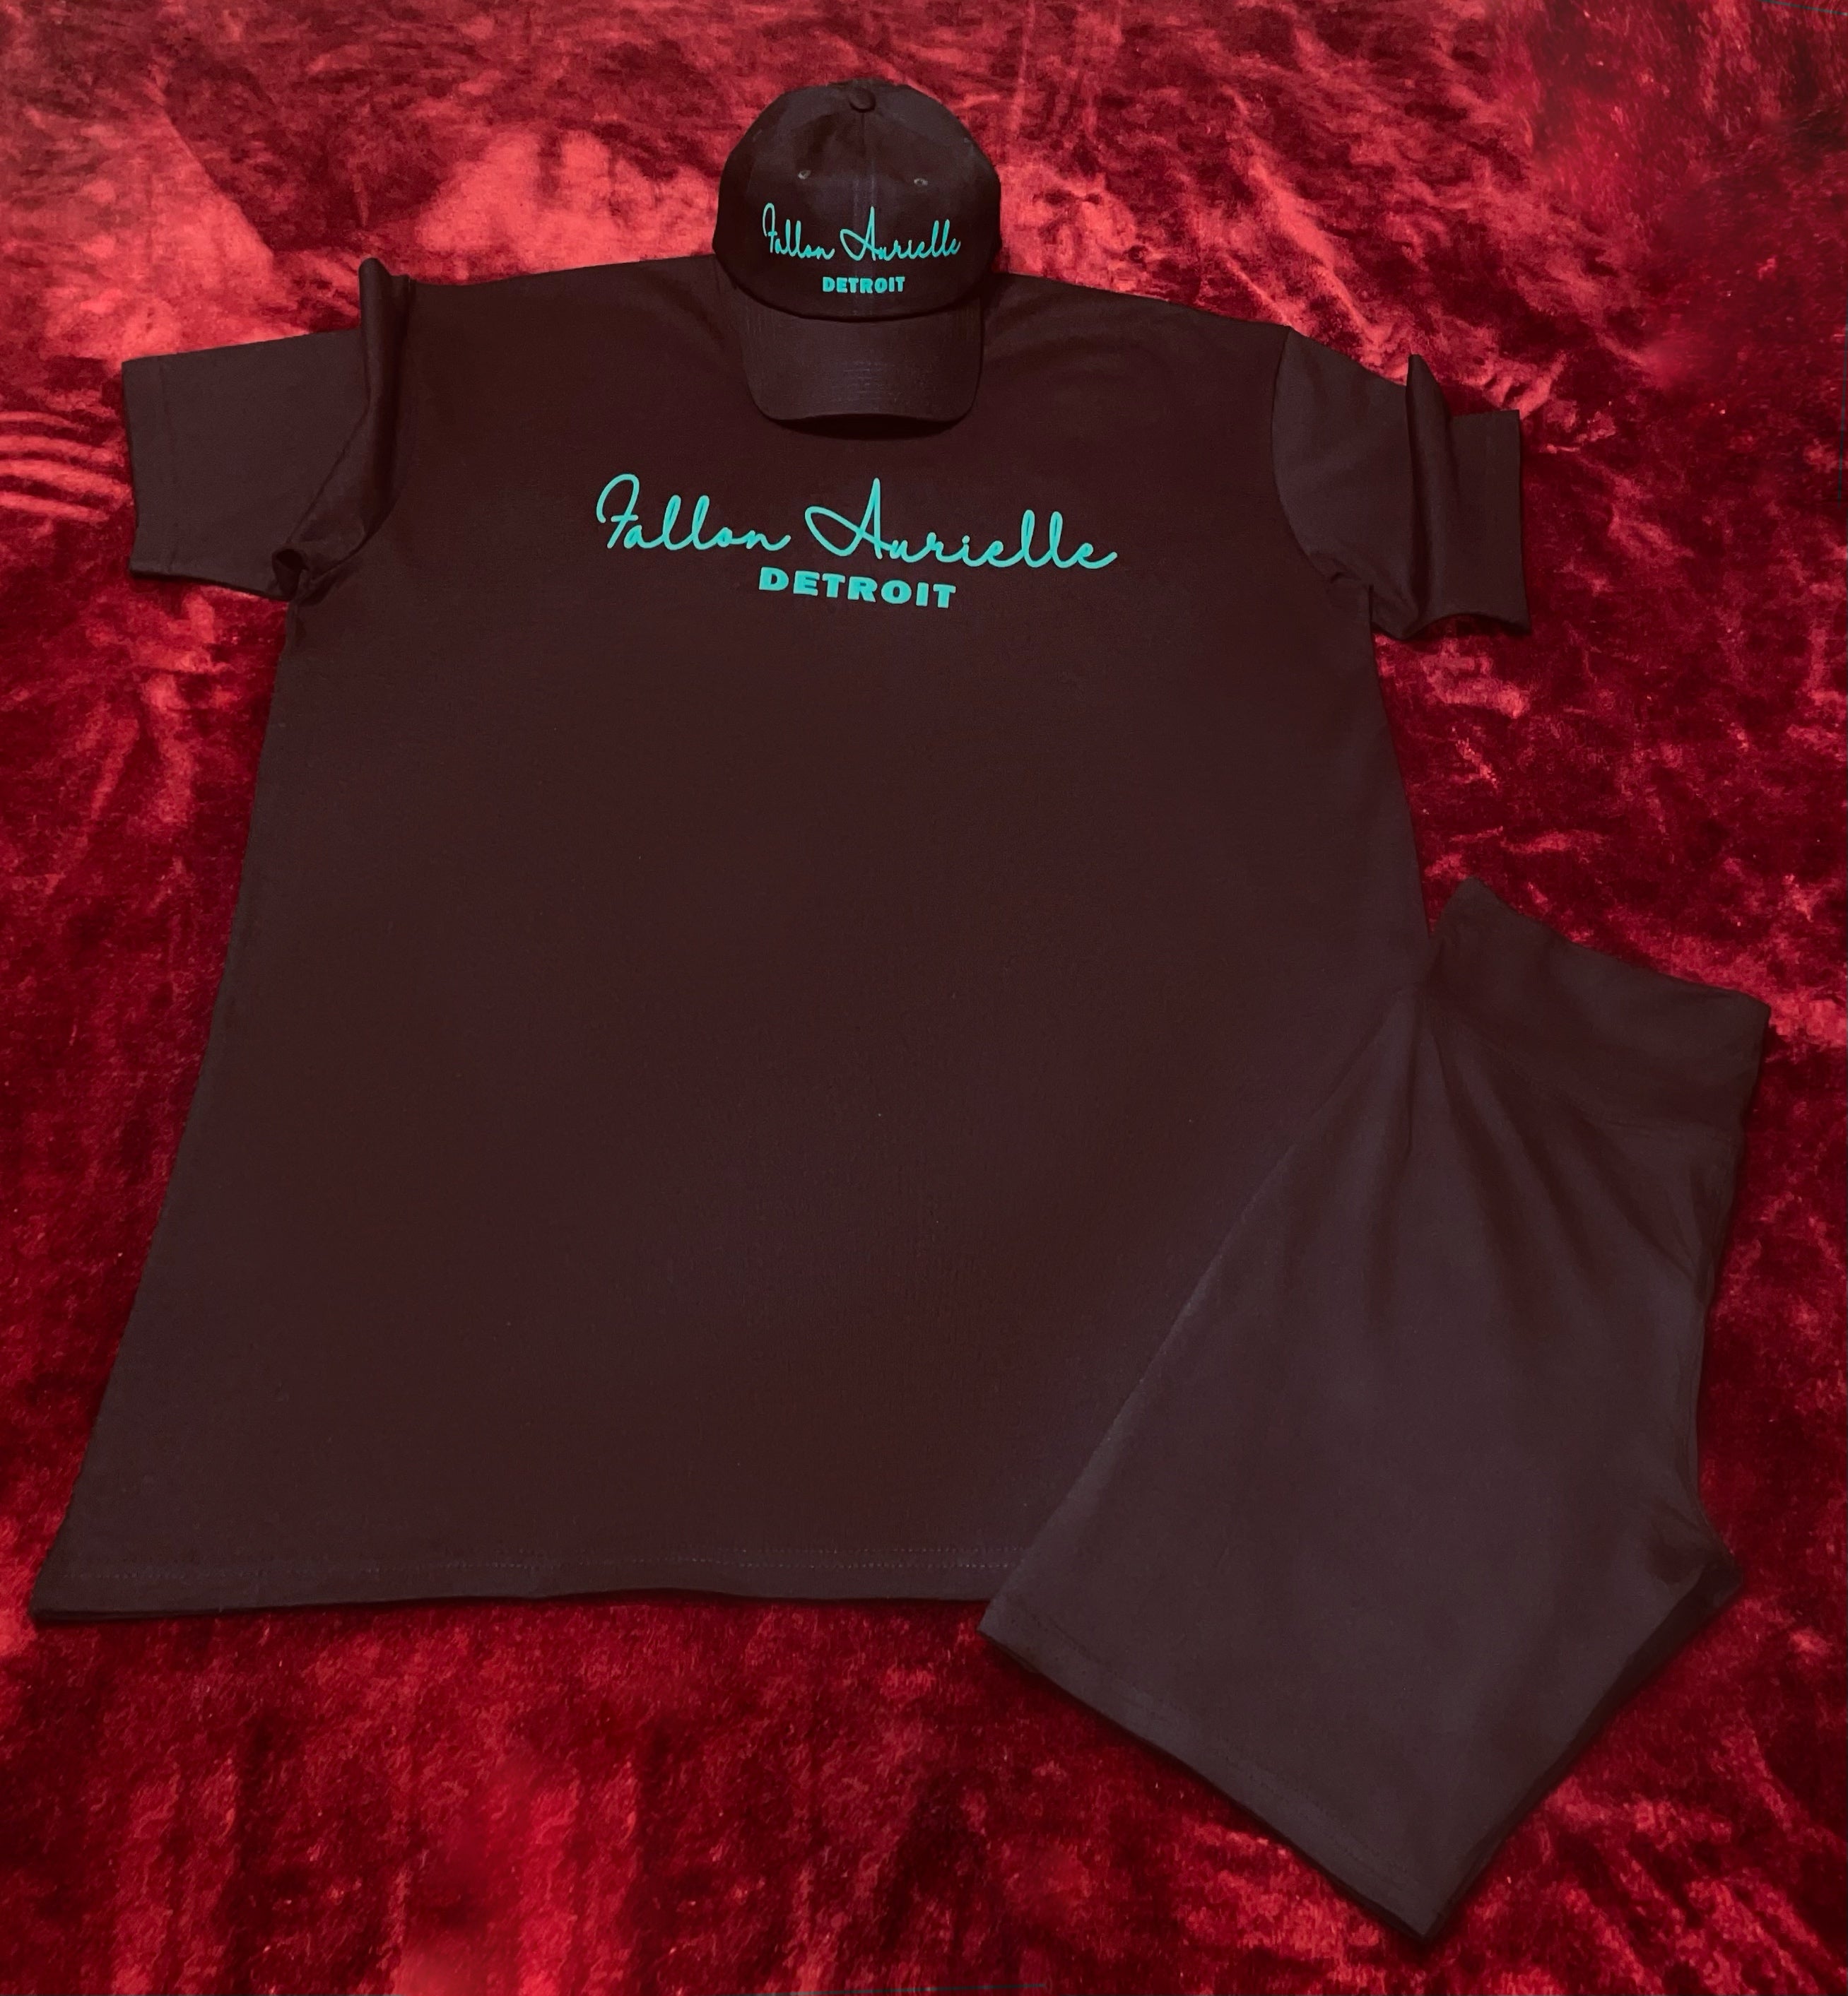 Fallon Aurielle Unisex Signature Detroit T-Shirt (Black & Hunter Green)